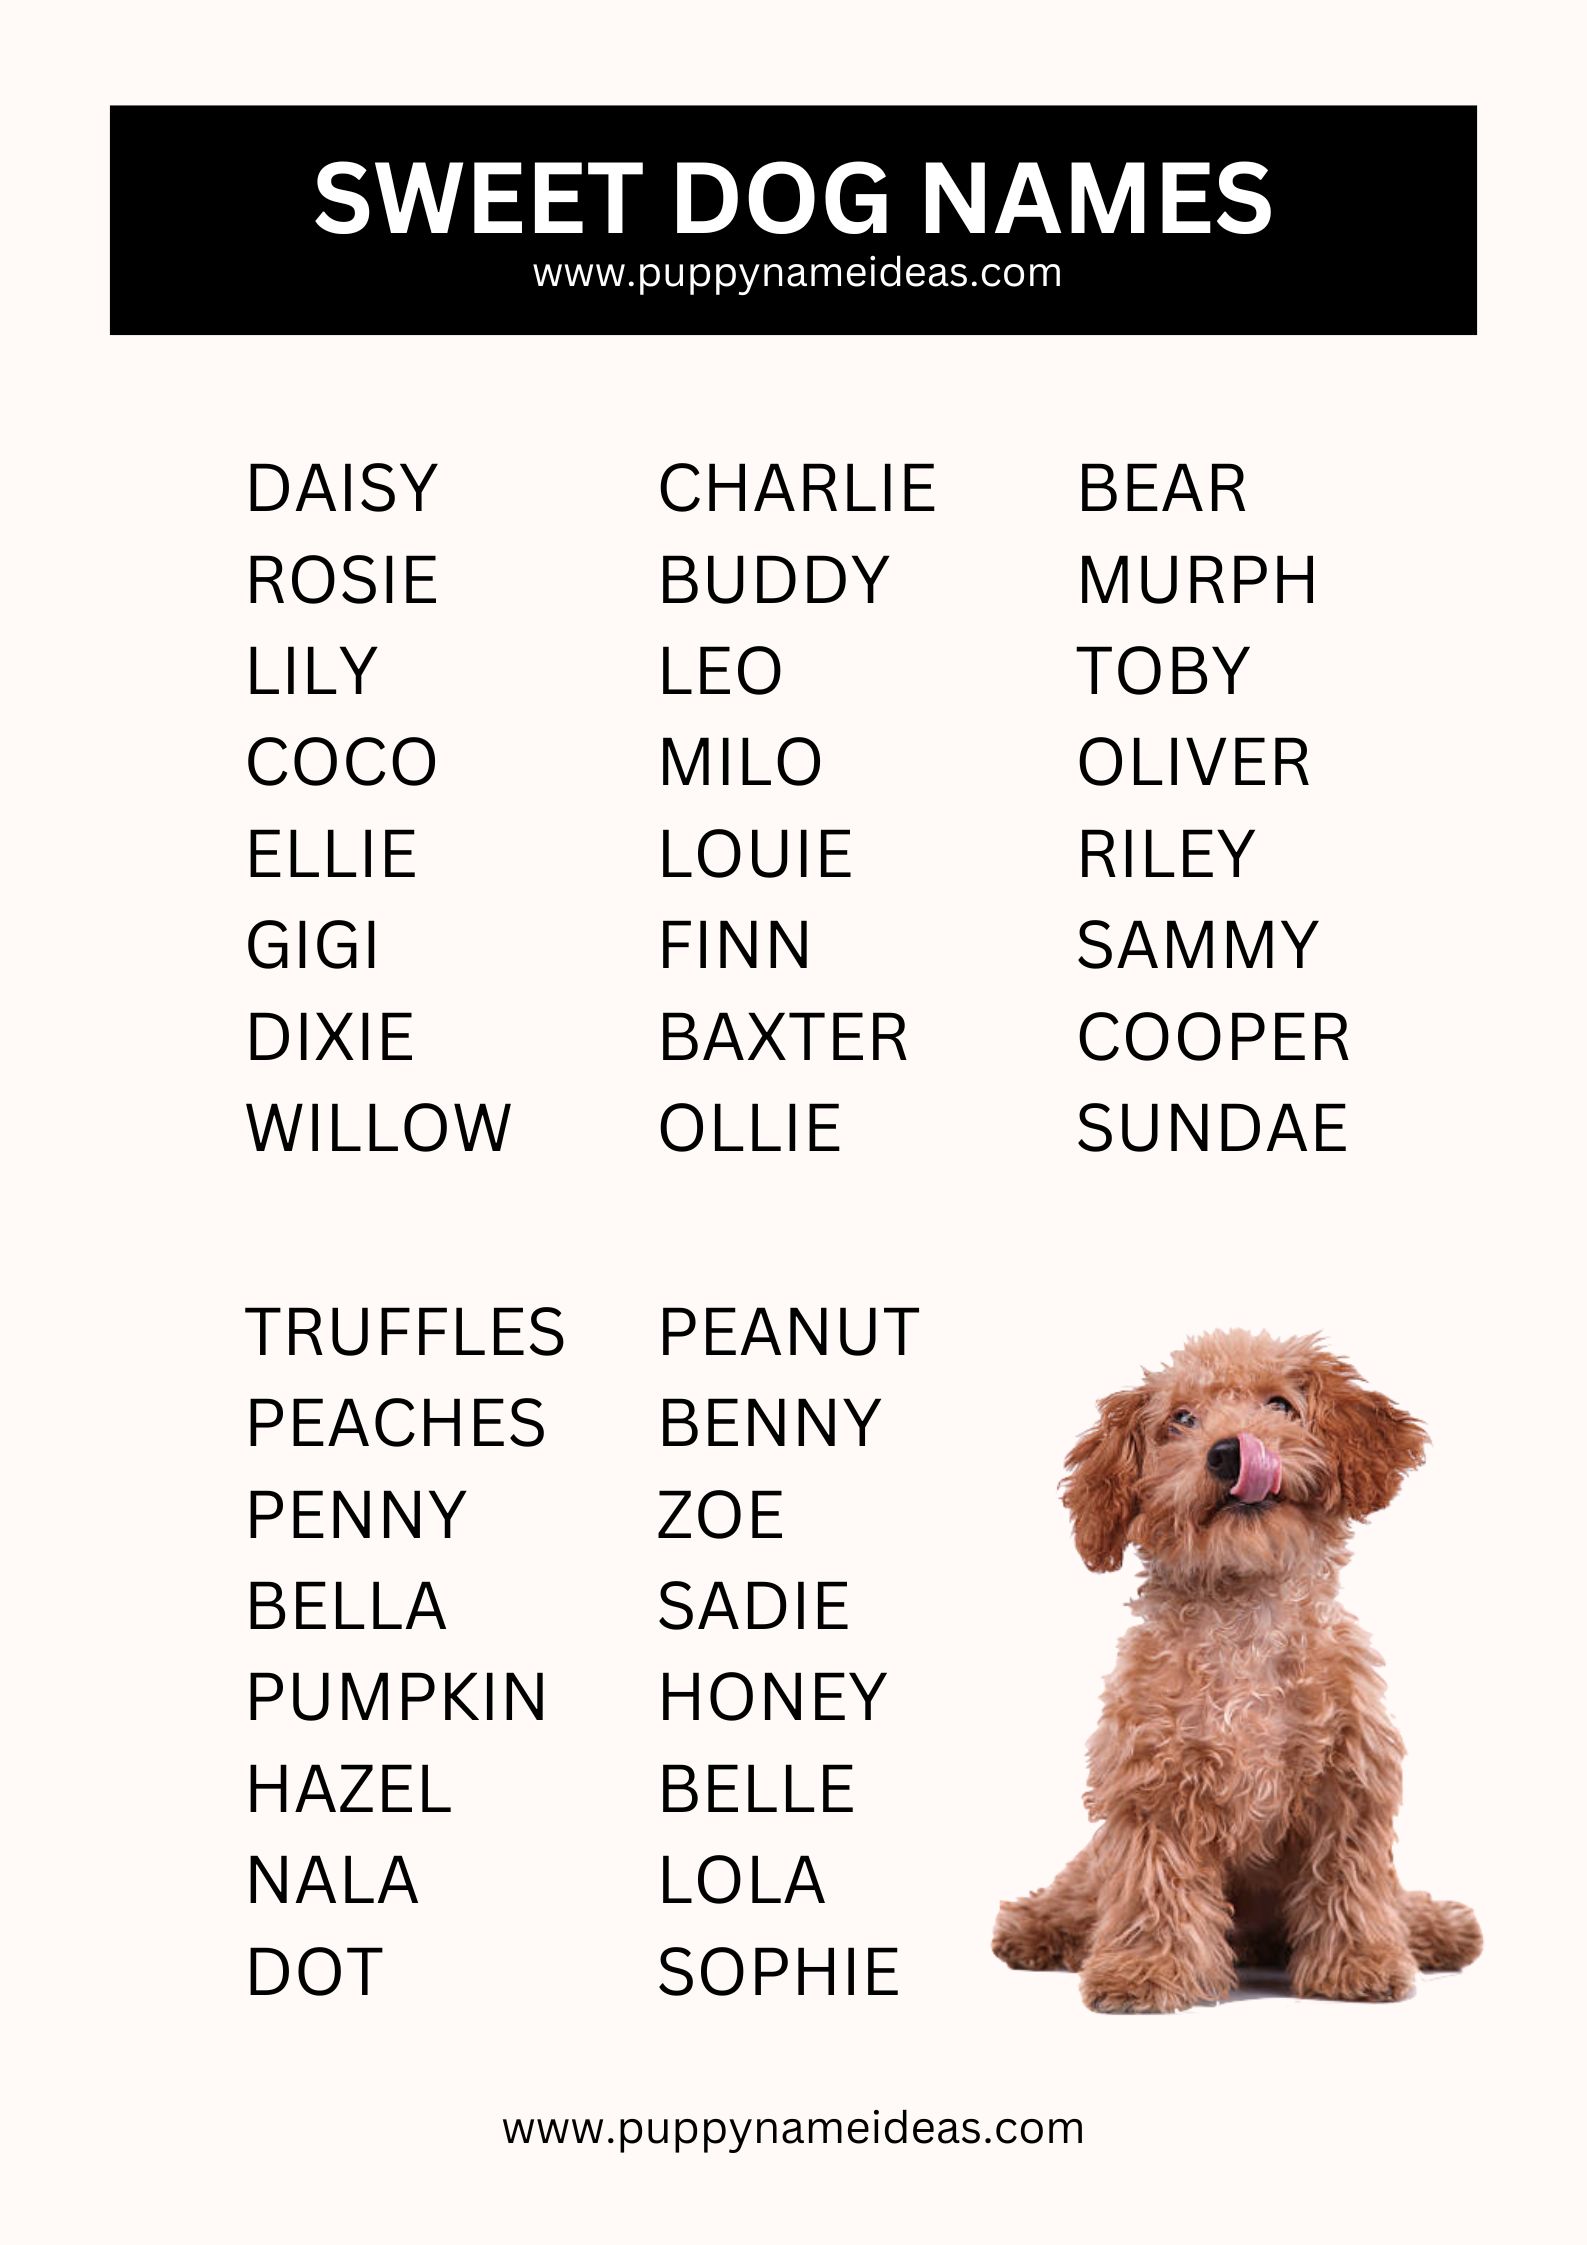 List of sweet dog names